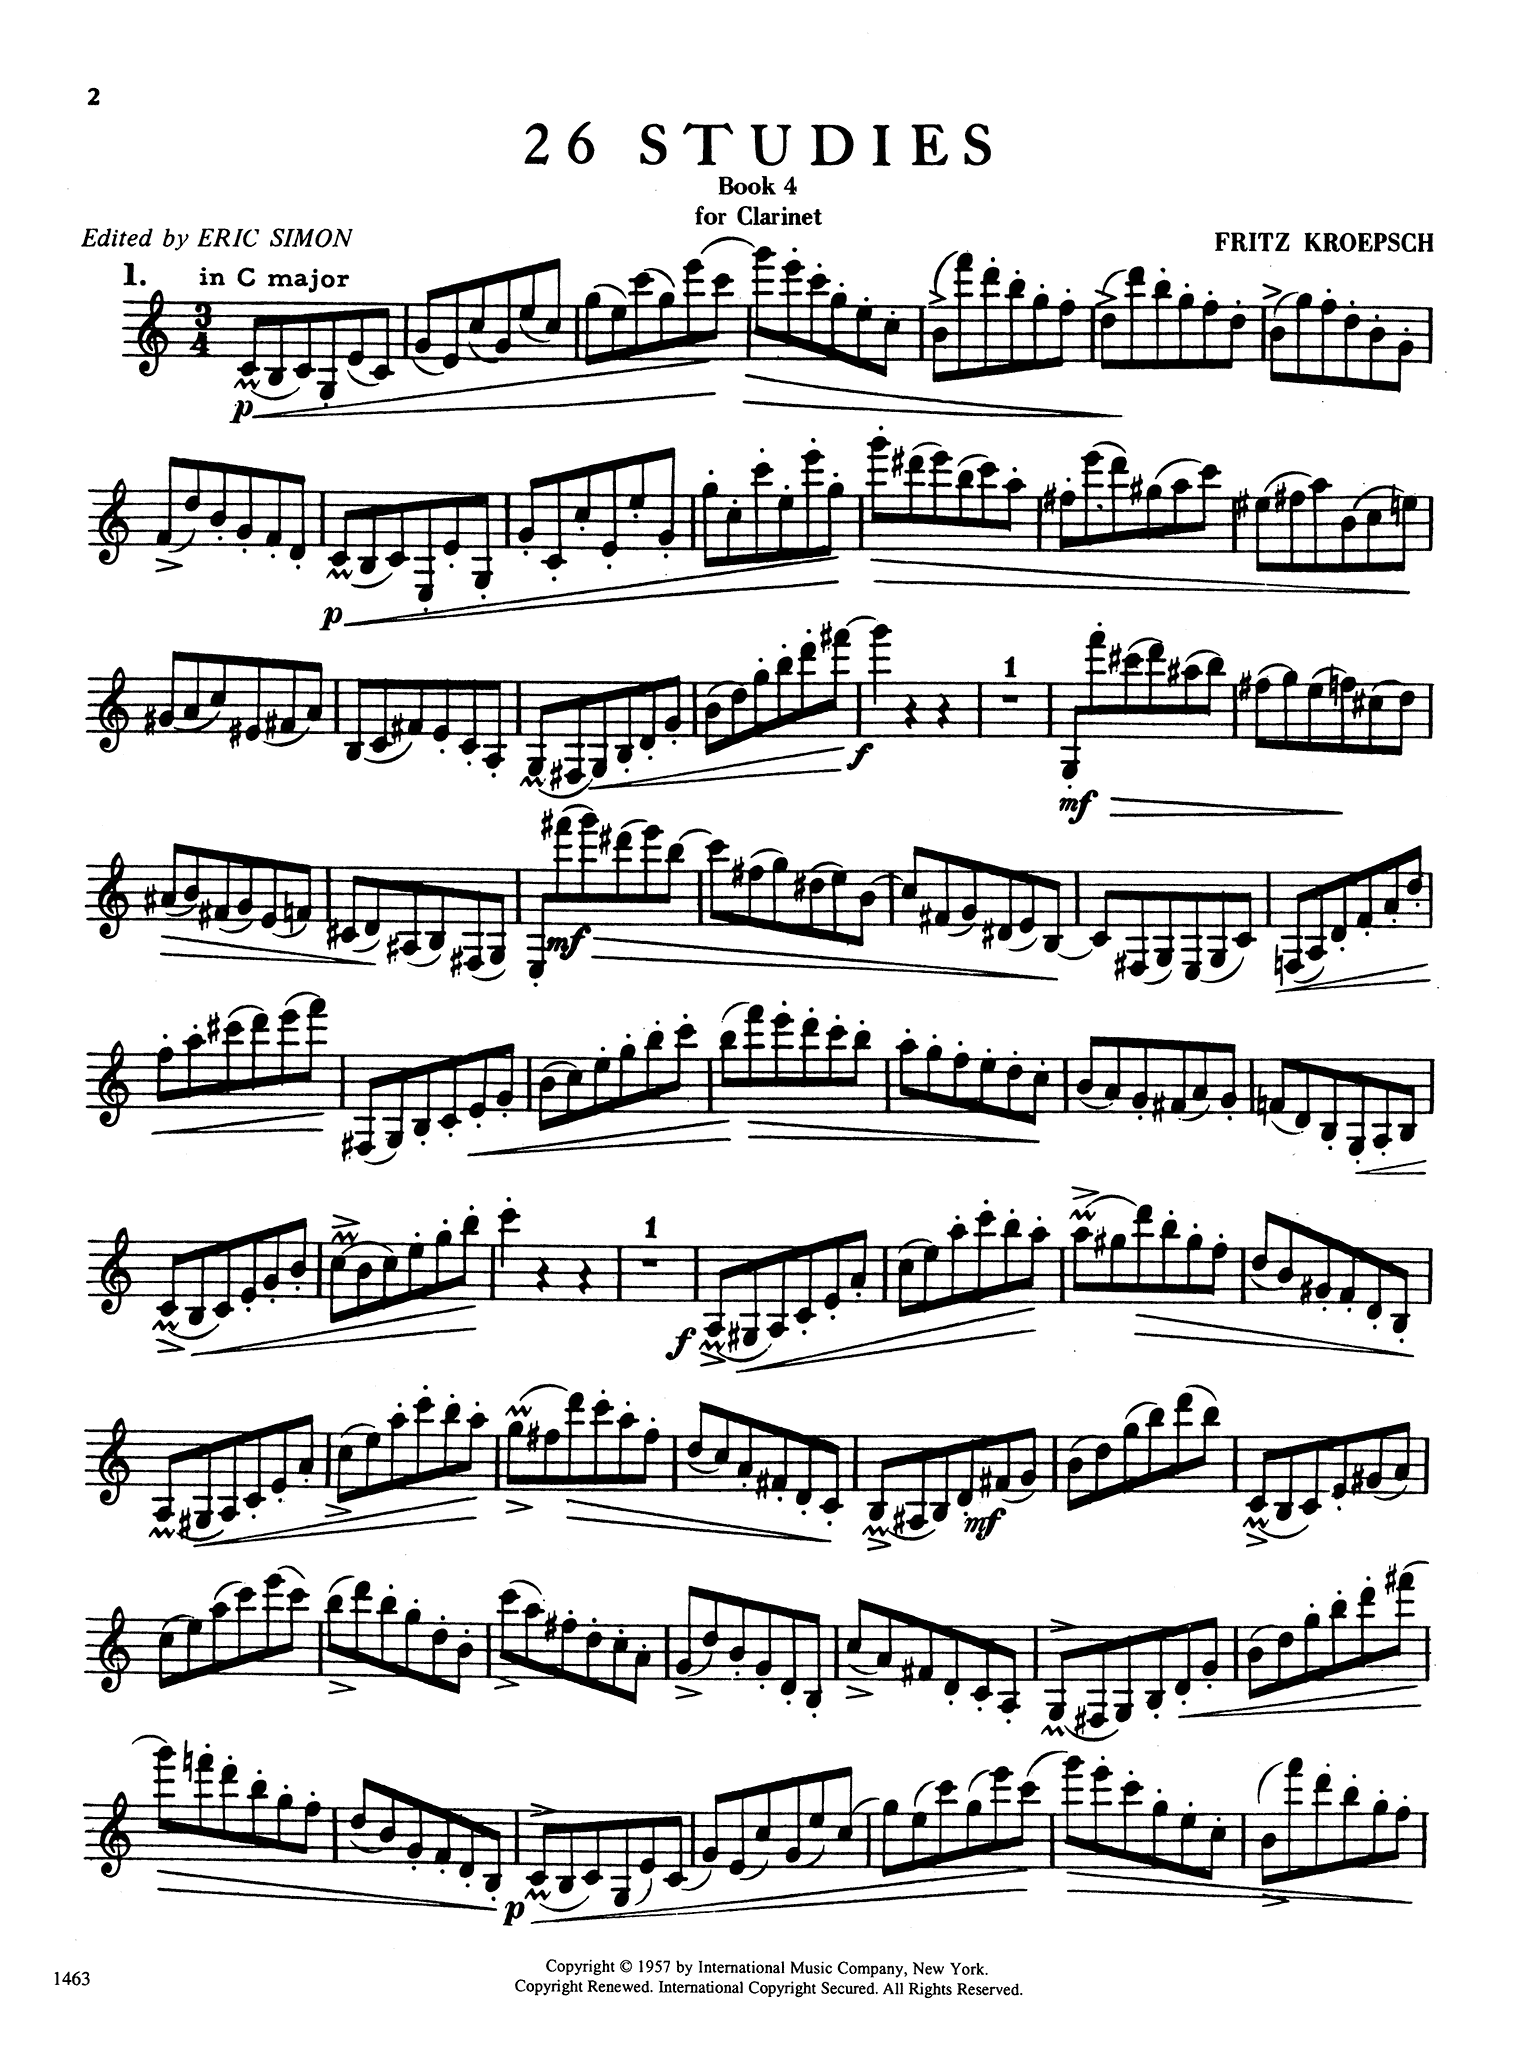 416 Progressive Studies for Clarinet, Book 4 Page 2